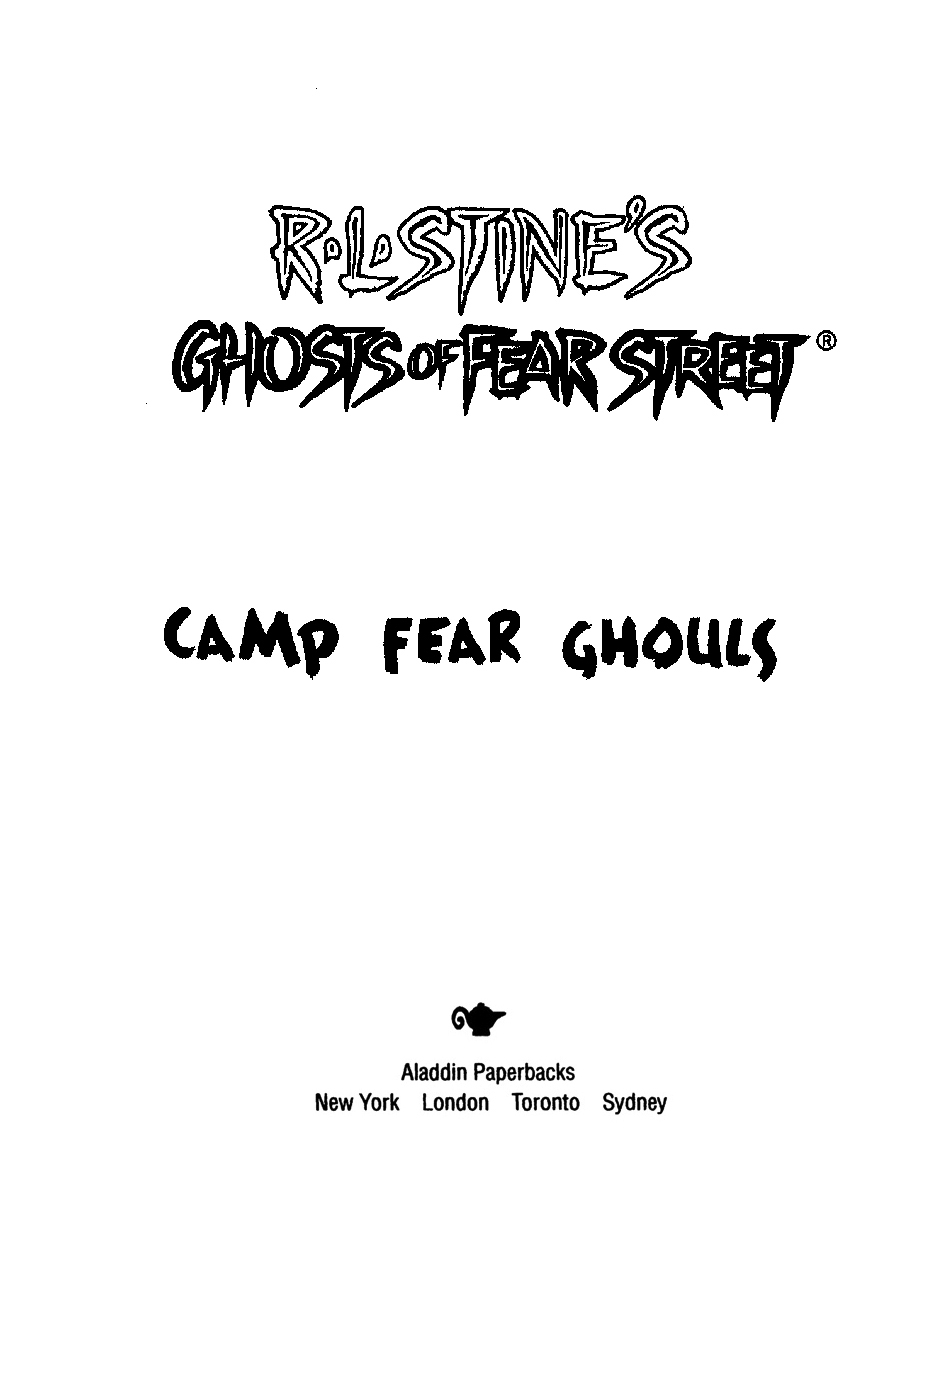 Camp Fear Ghouls by R.L. Stine